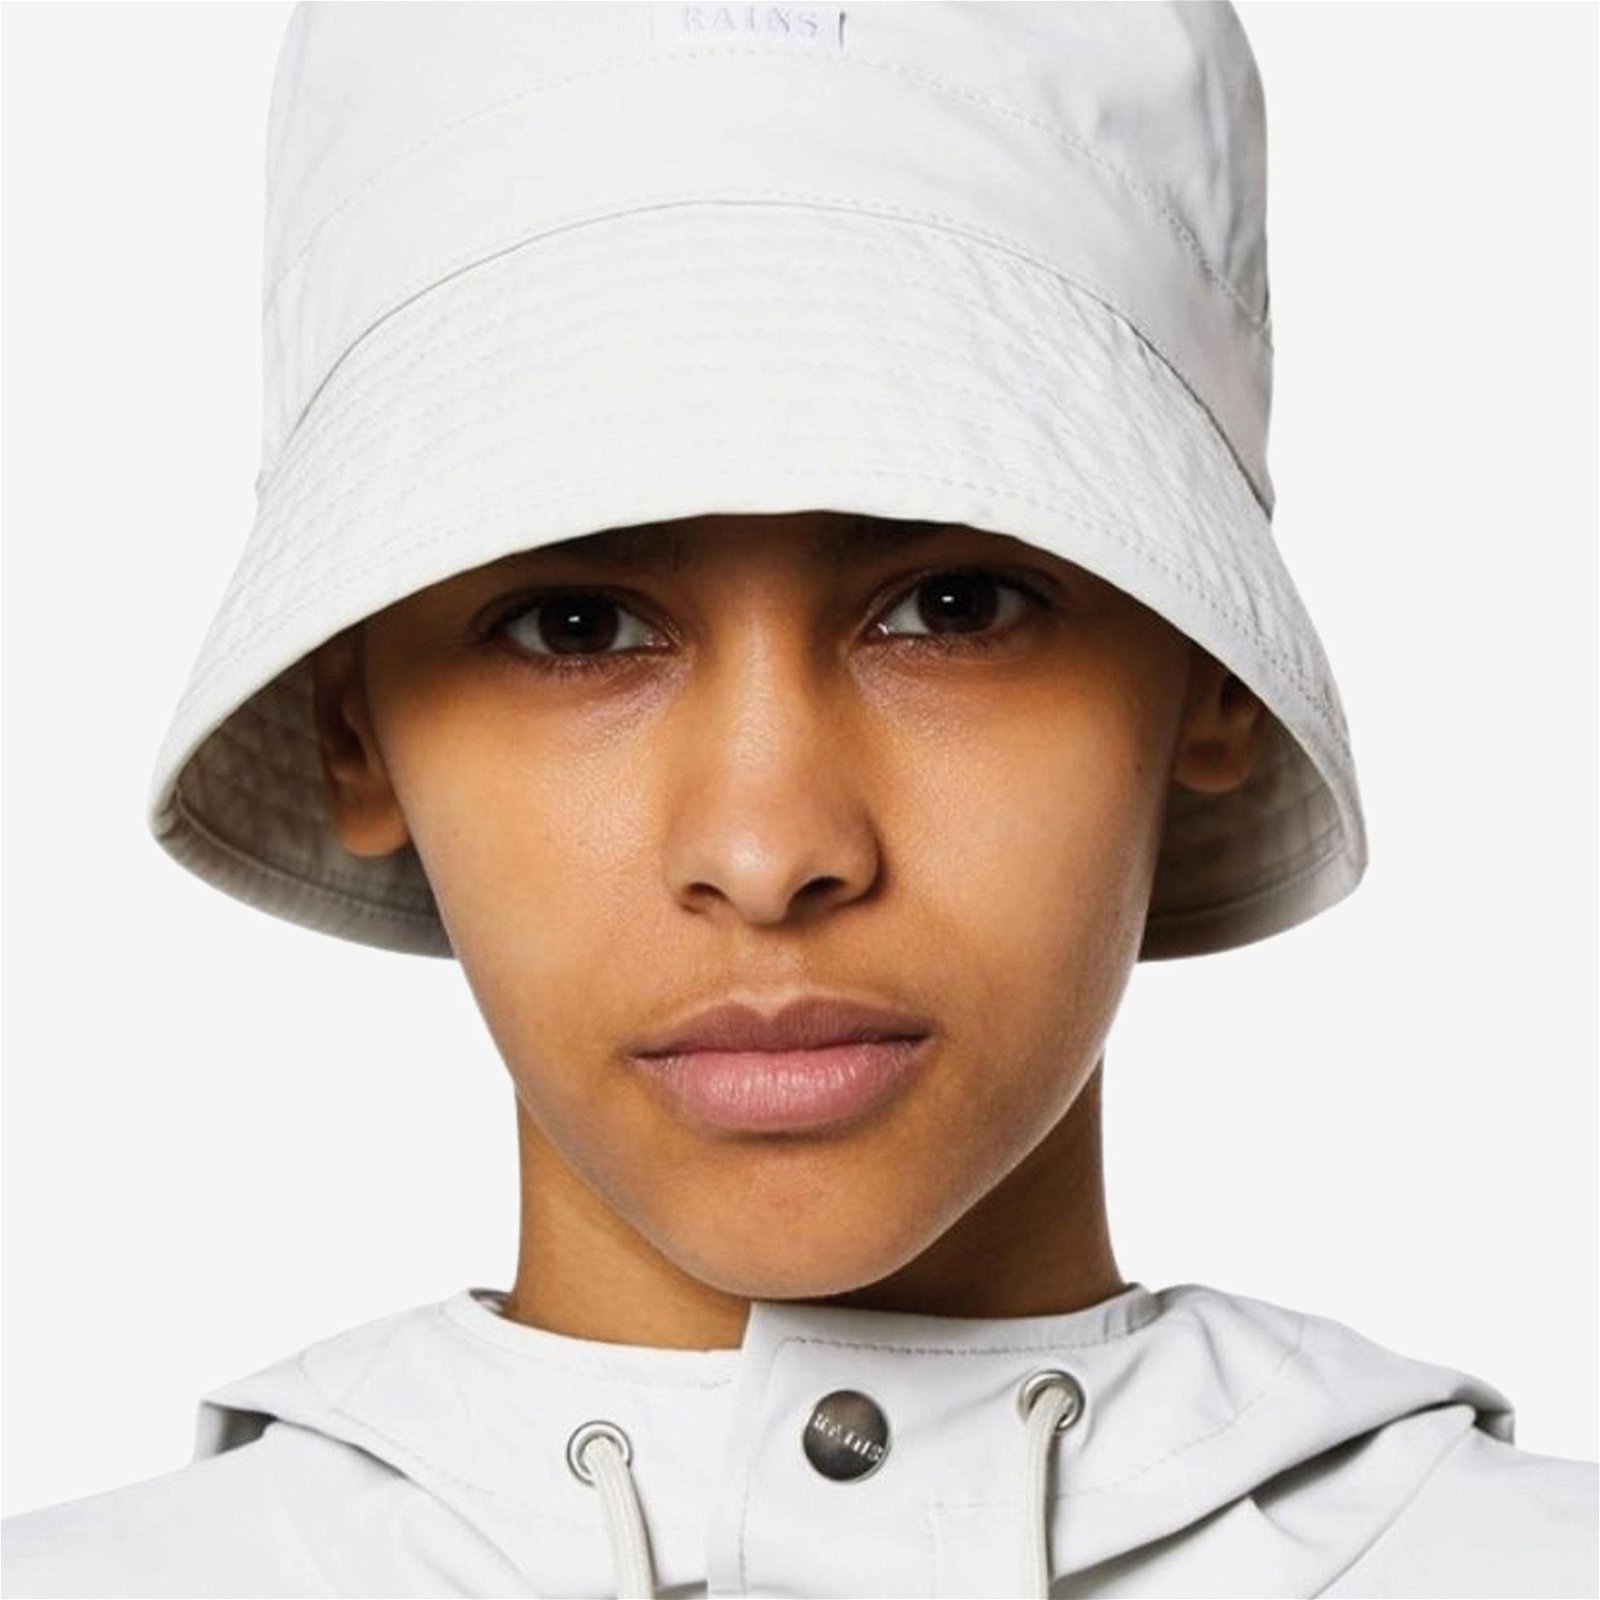 Rains Bucket Hat Off White Unisex Krem Rengi Şapka